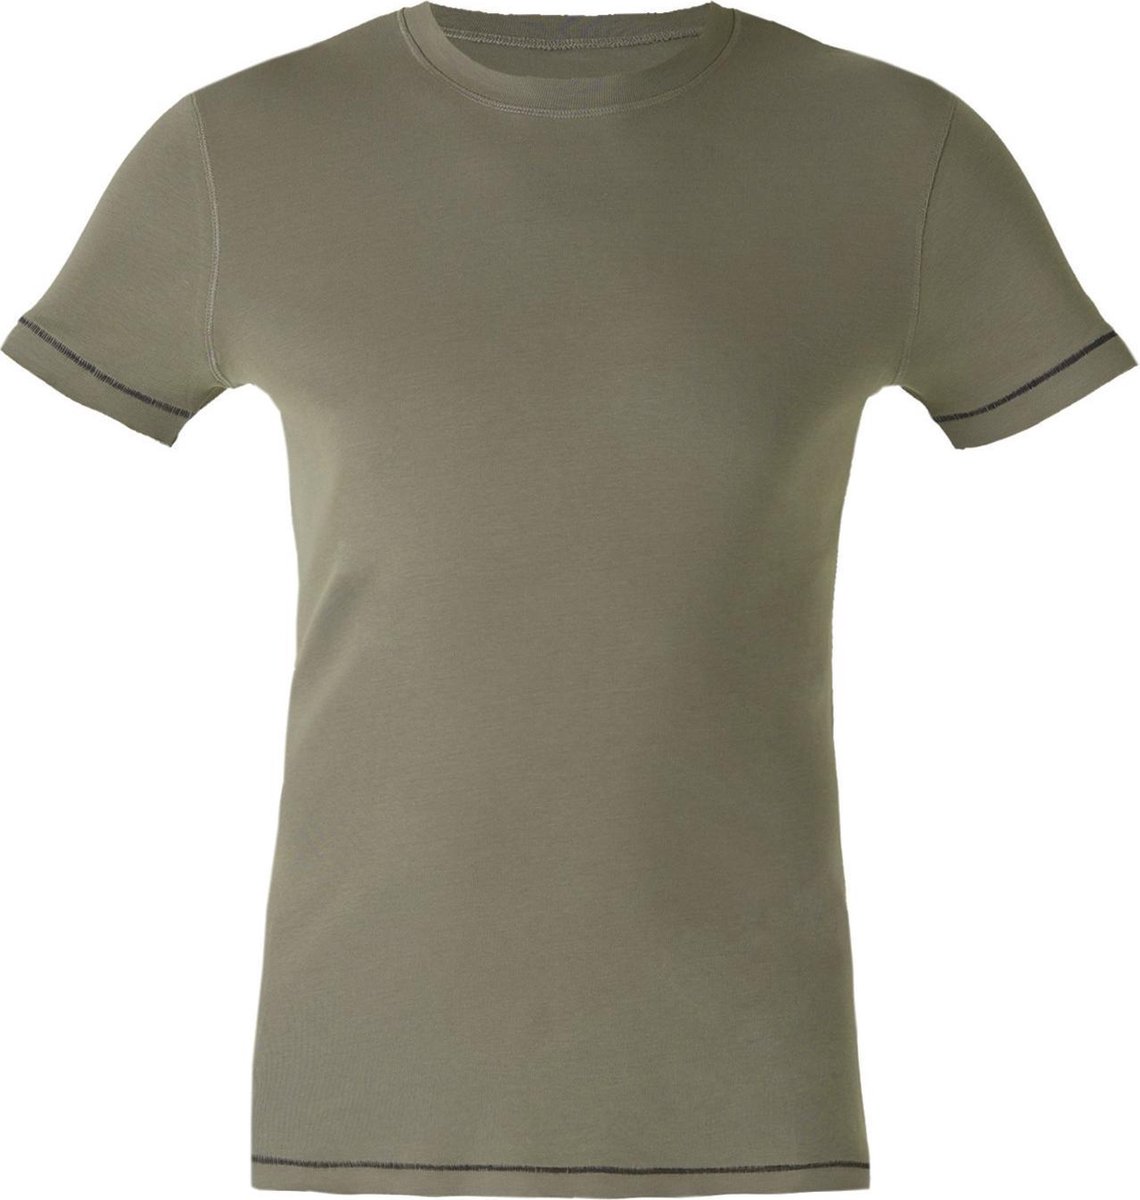 Yoga-T-Shirt "Oliver", olive XL Loungewear shirt YOGISTAR